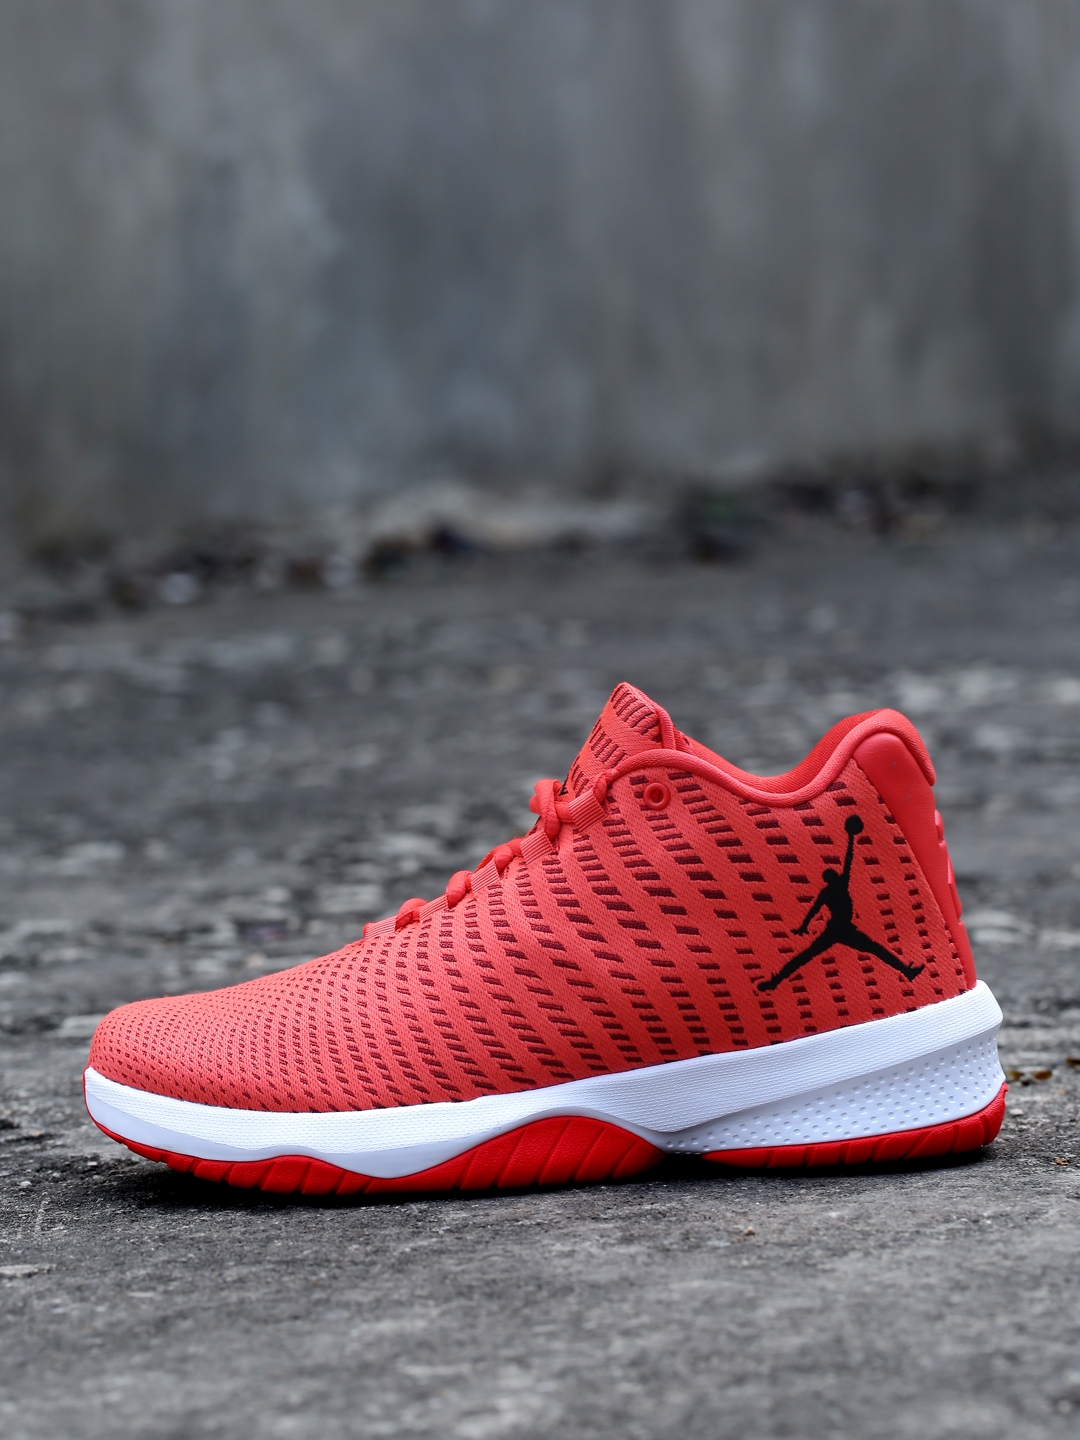 red jordan basketball shoes